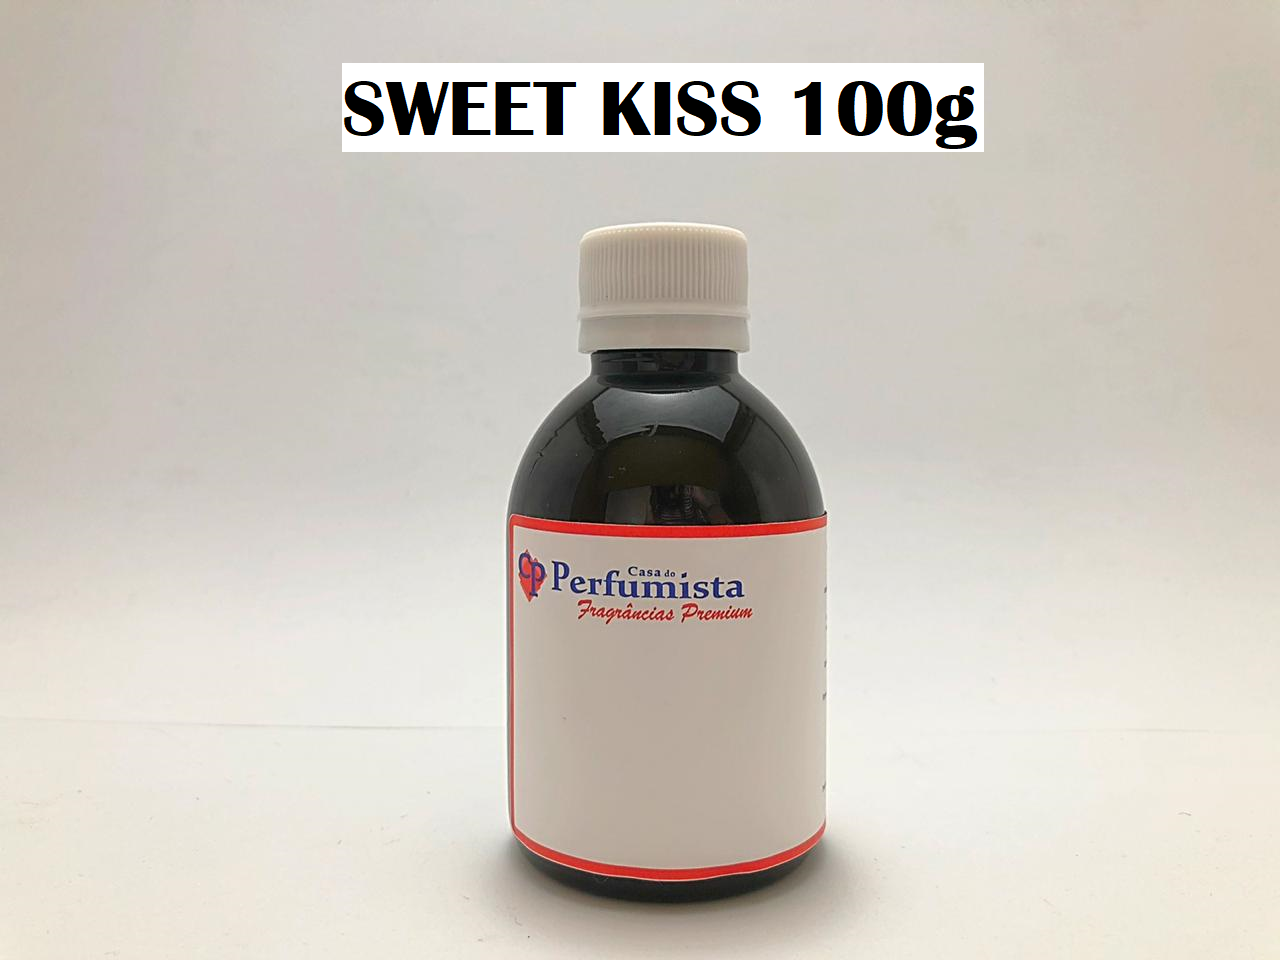 SWEET KISS - 100g